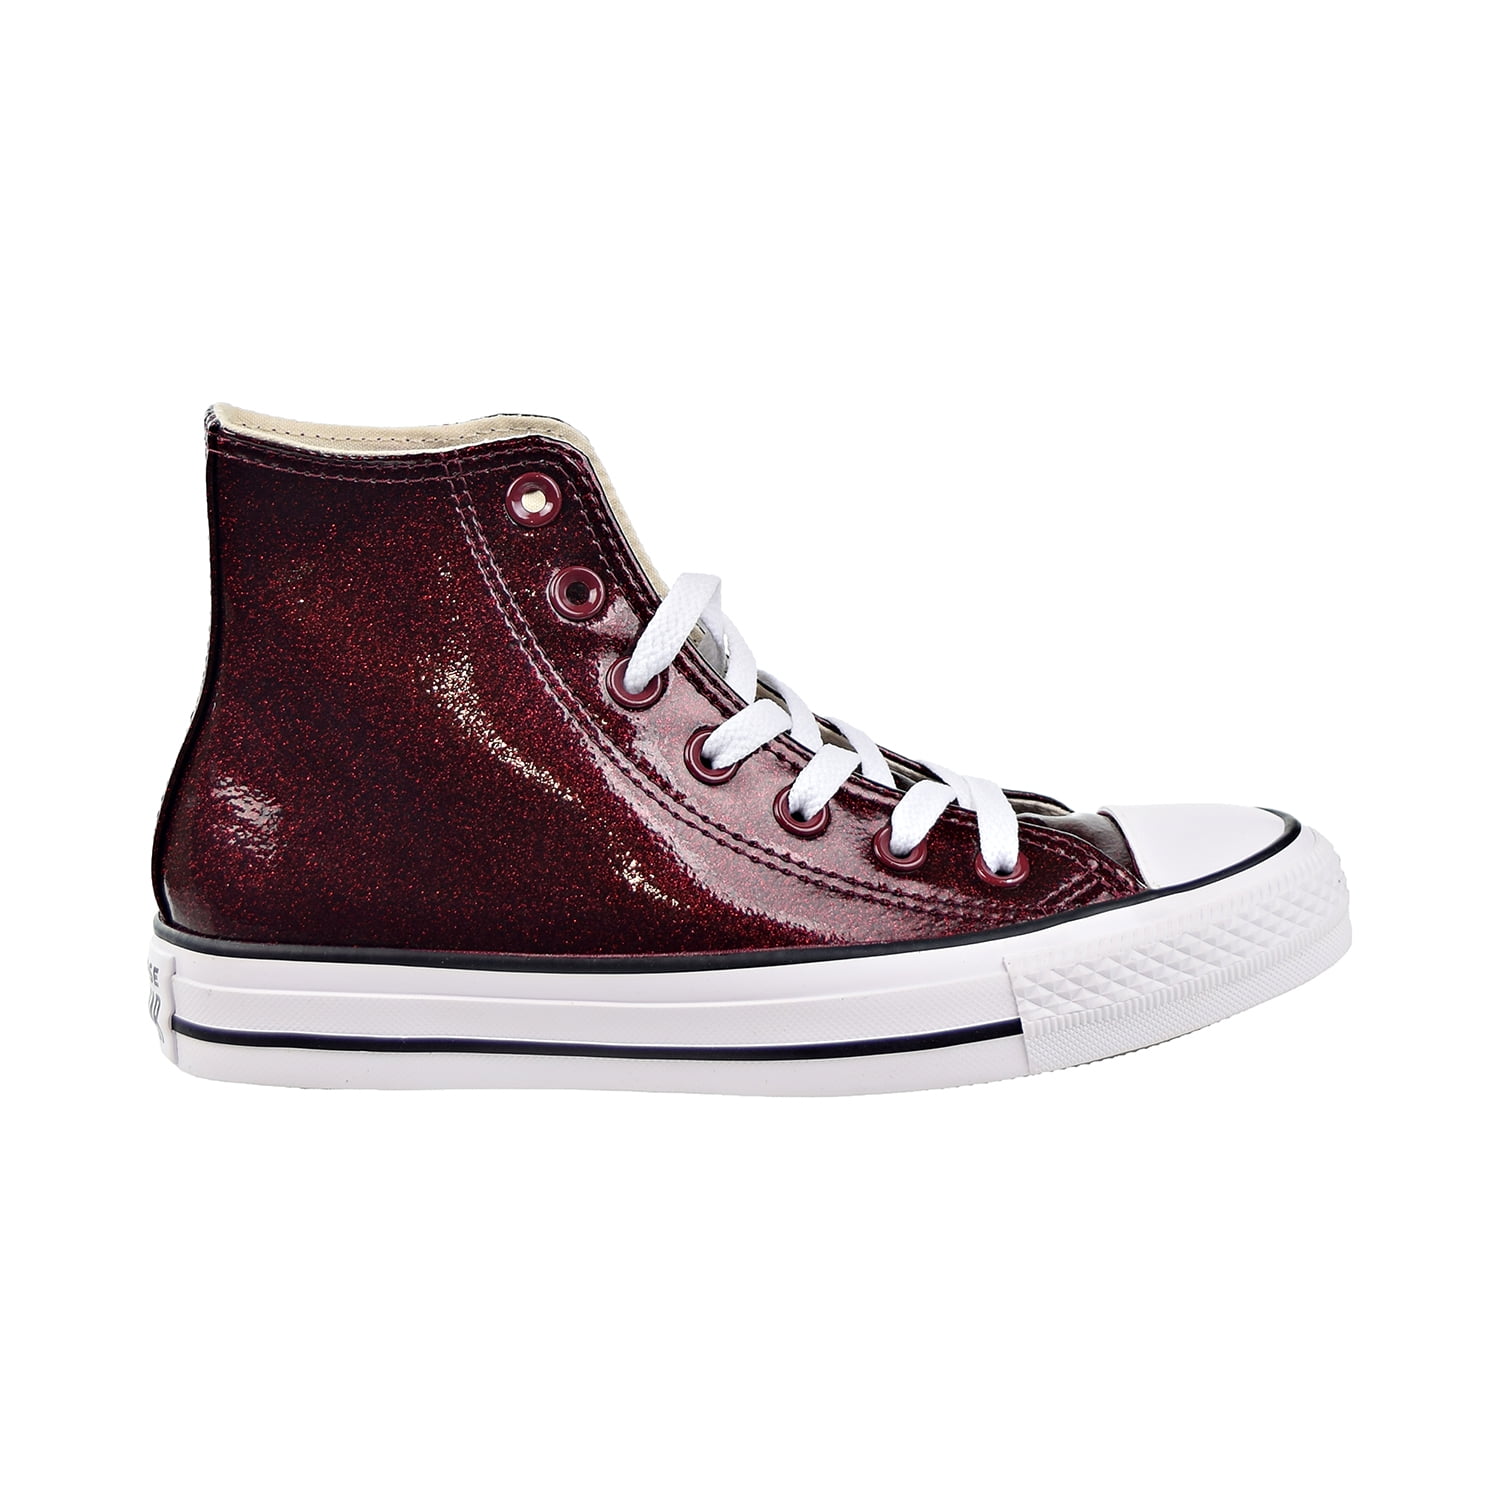 Converse Chuck Taylor All Star HI Women's Shoes Dark Burgundy-White-Black  562480c 